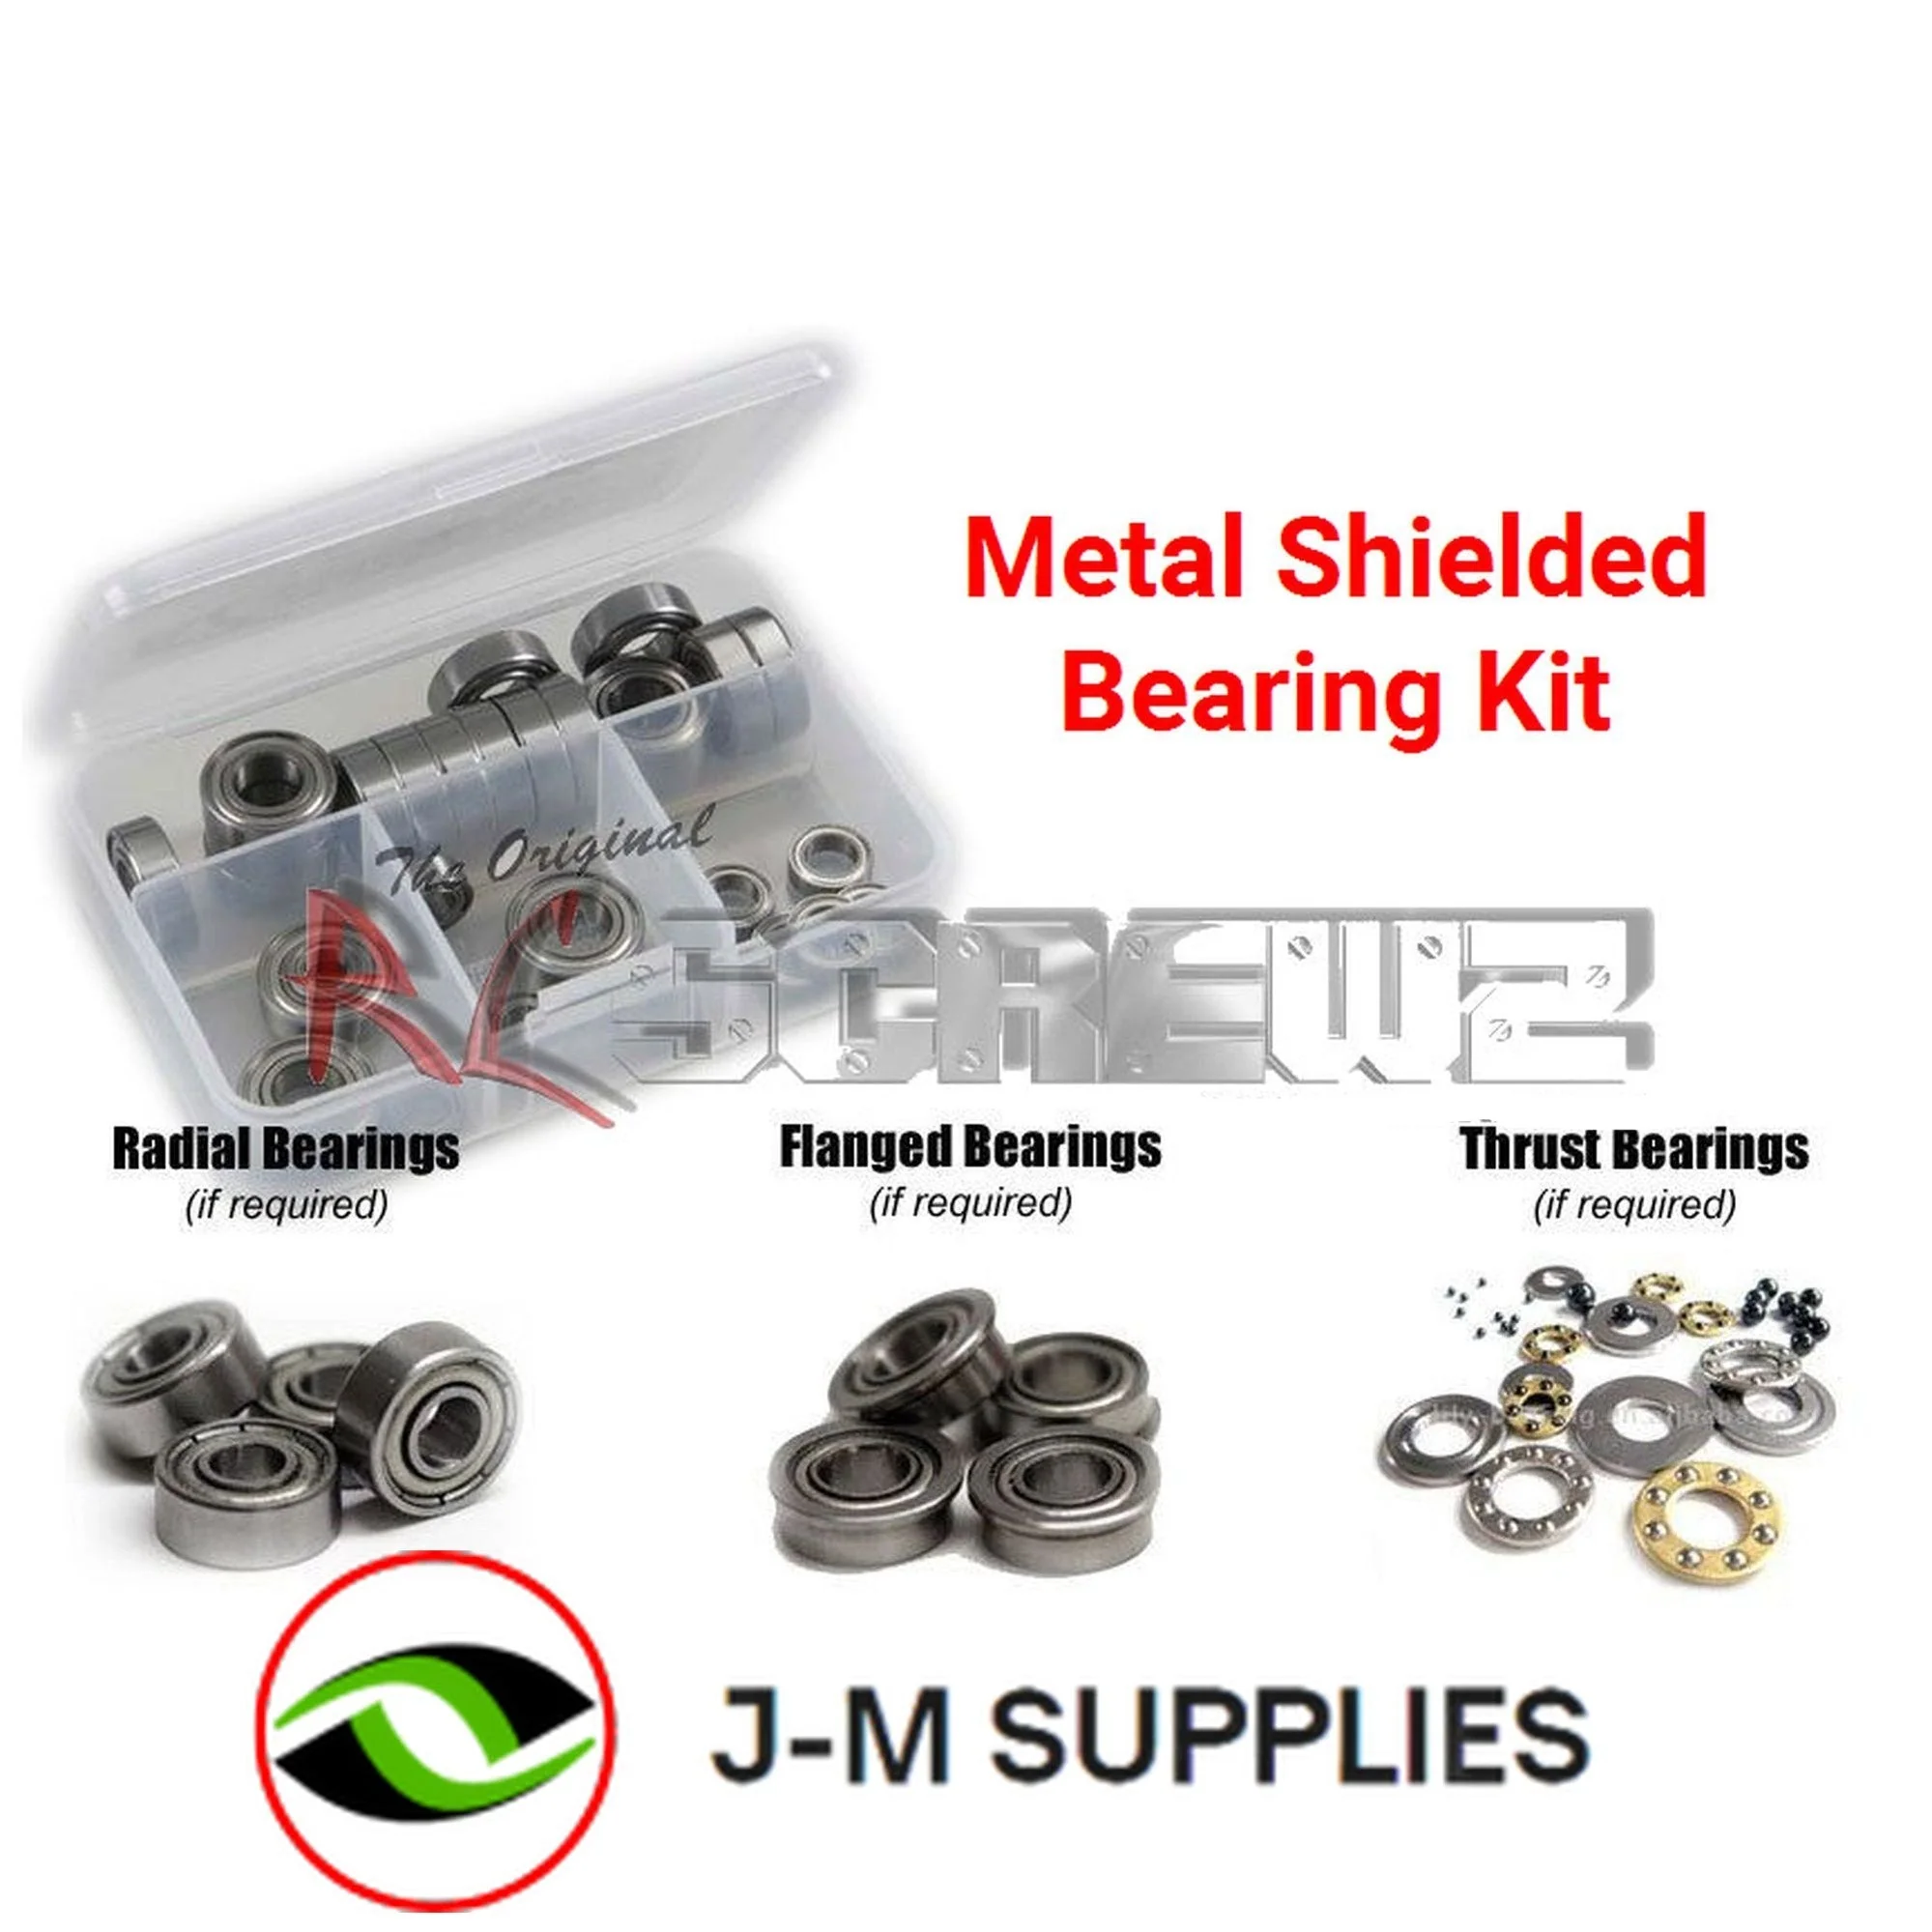 RCScrewZ Metal Shielded Bearing Kit cus002b for Custom Works Intimidator GBX - Picture 1 of 12